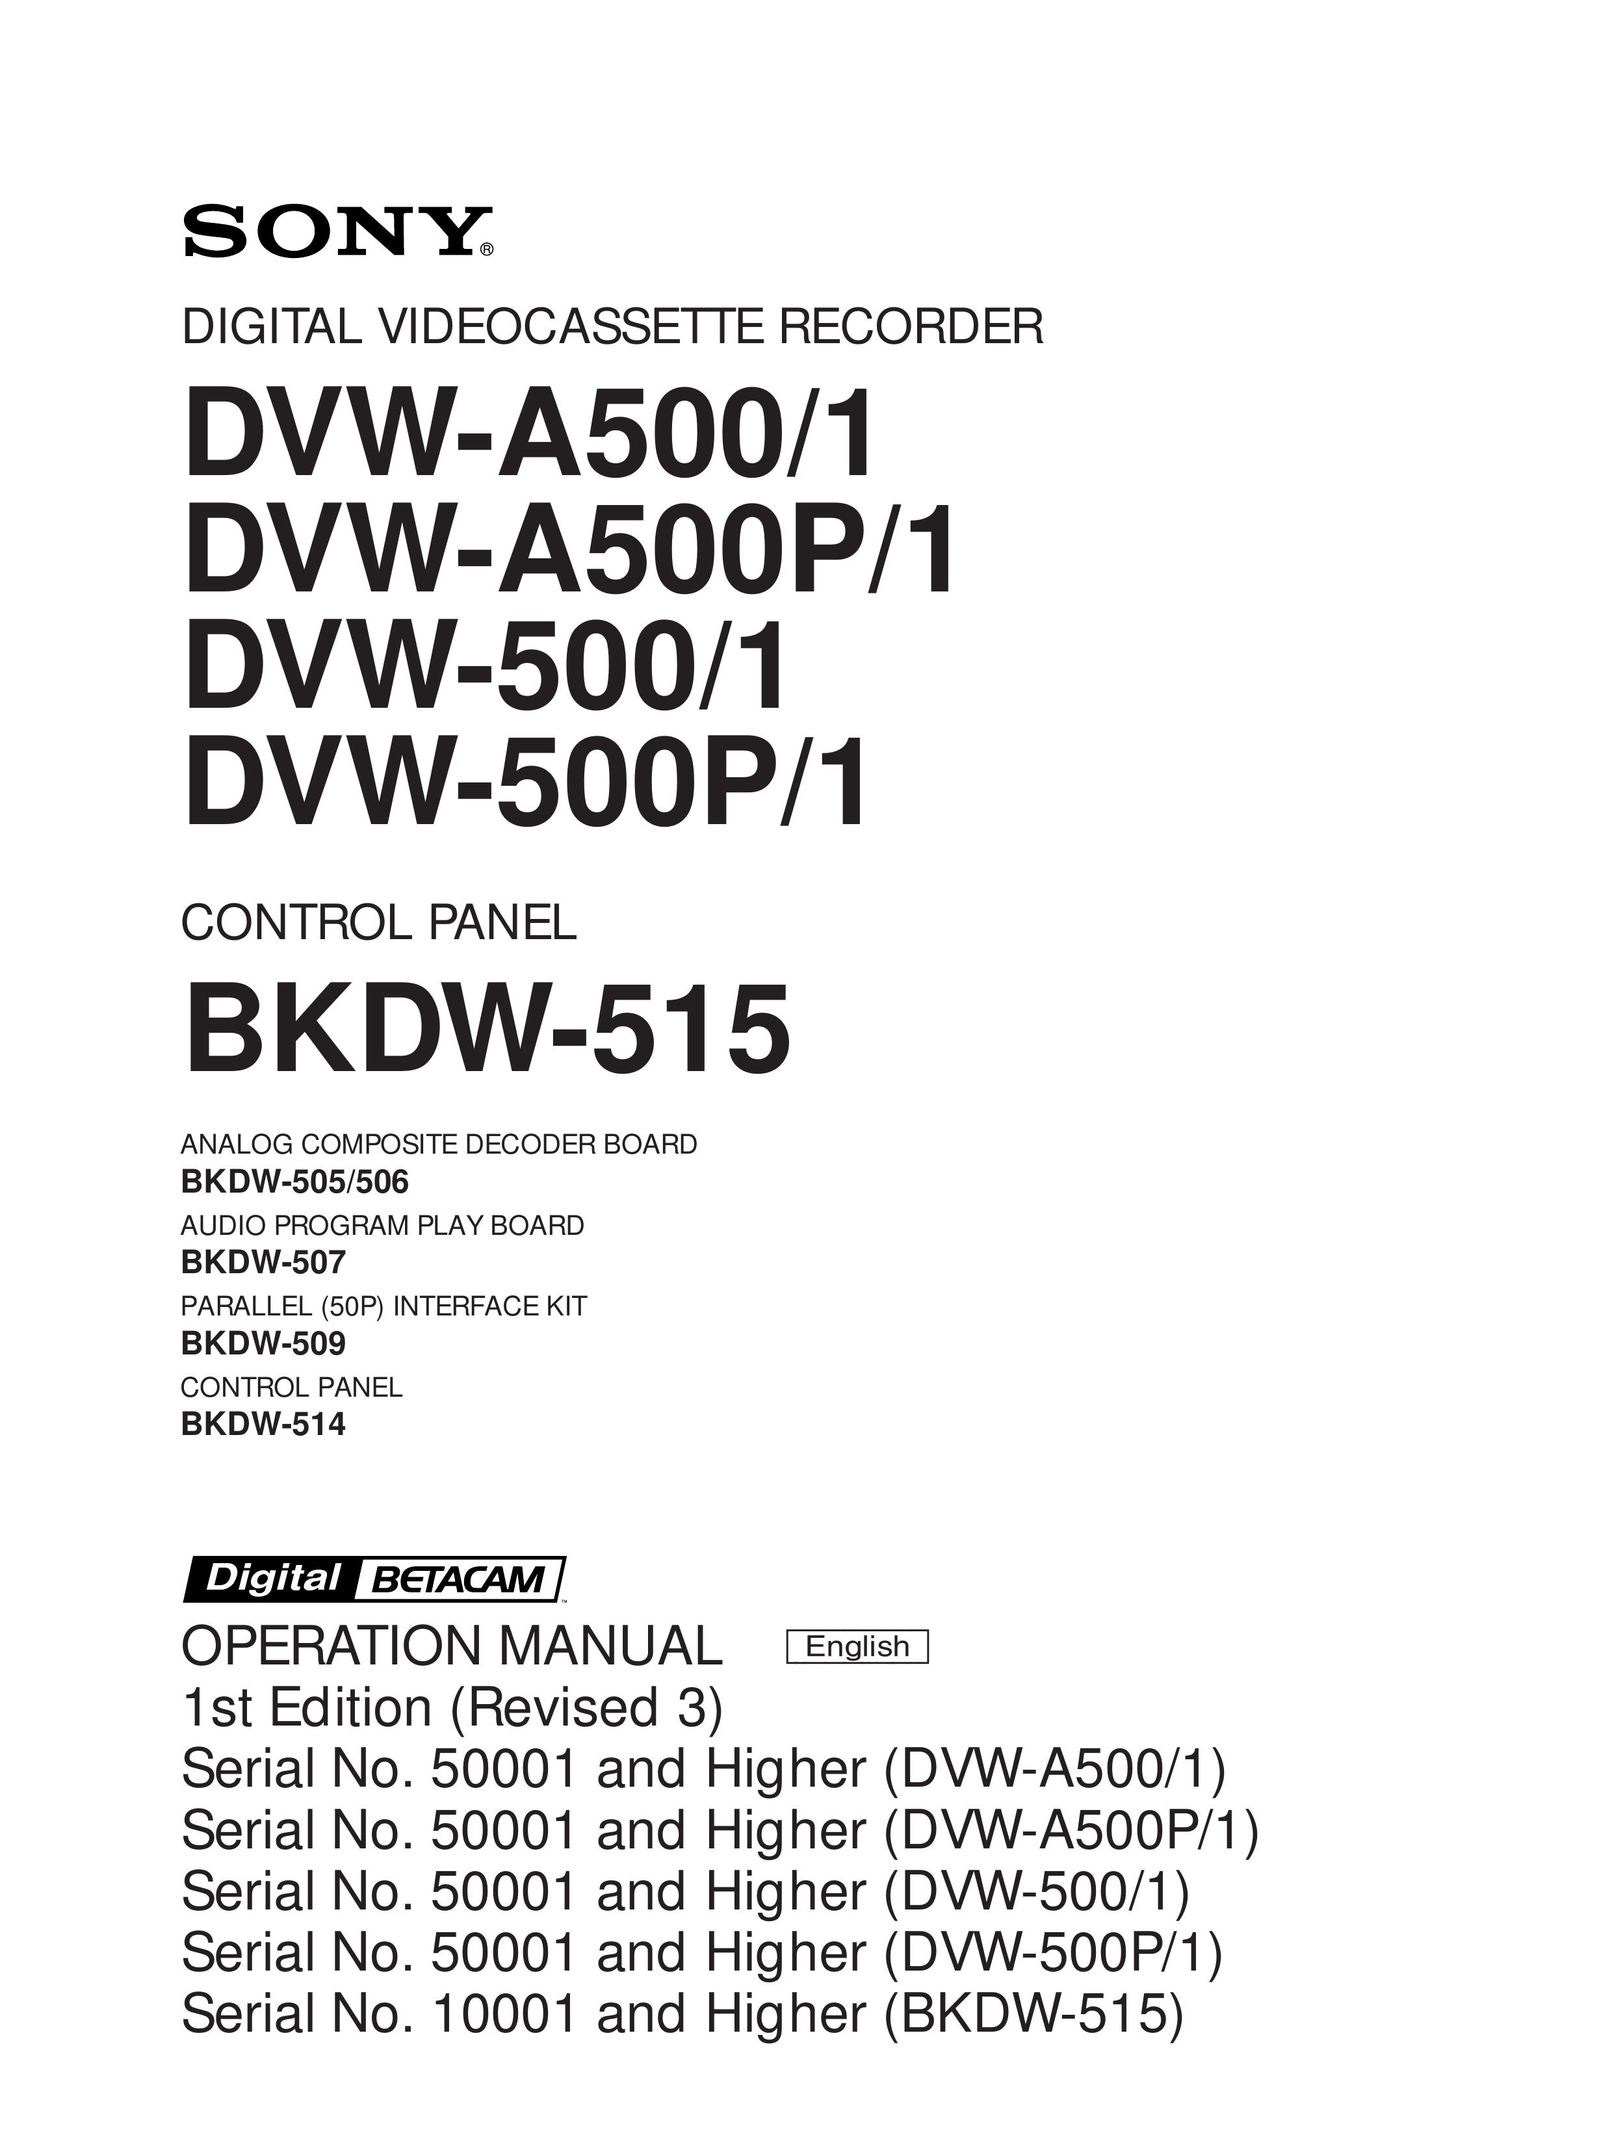 Sony BKDW-509 DVR User Manual